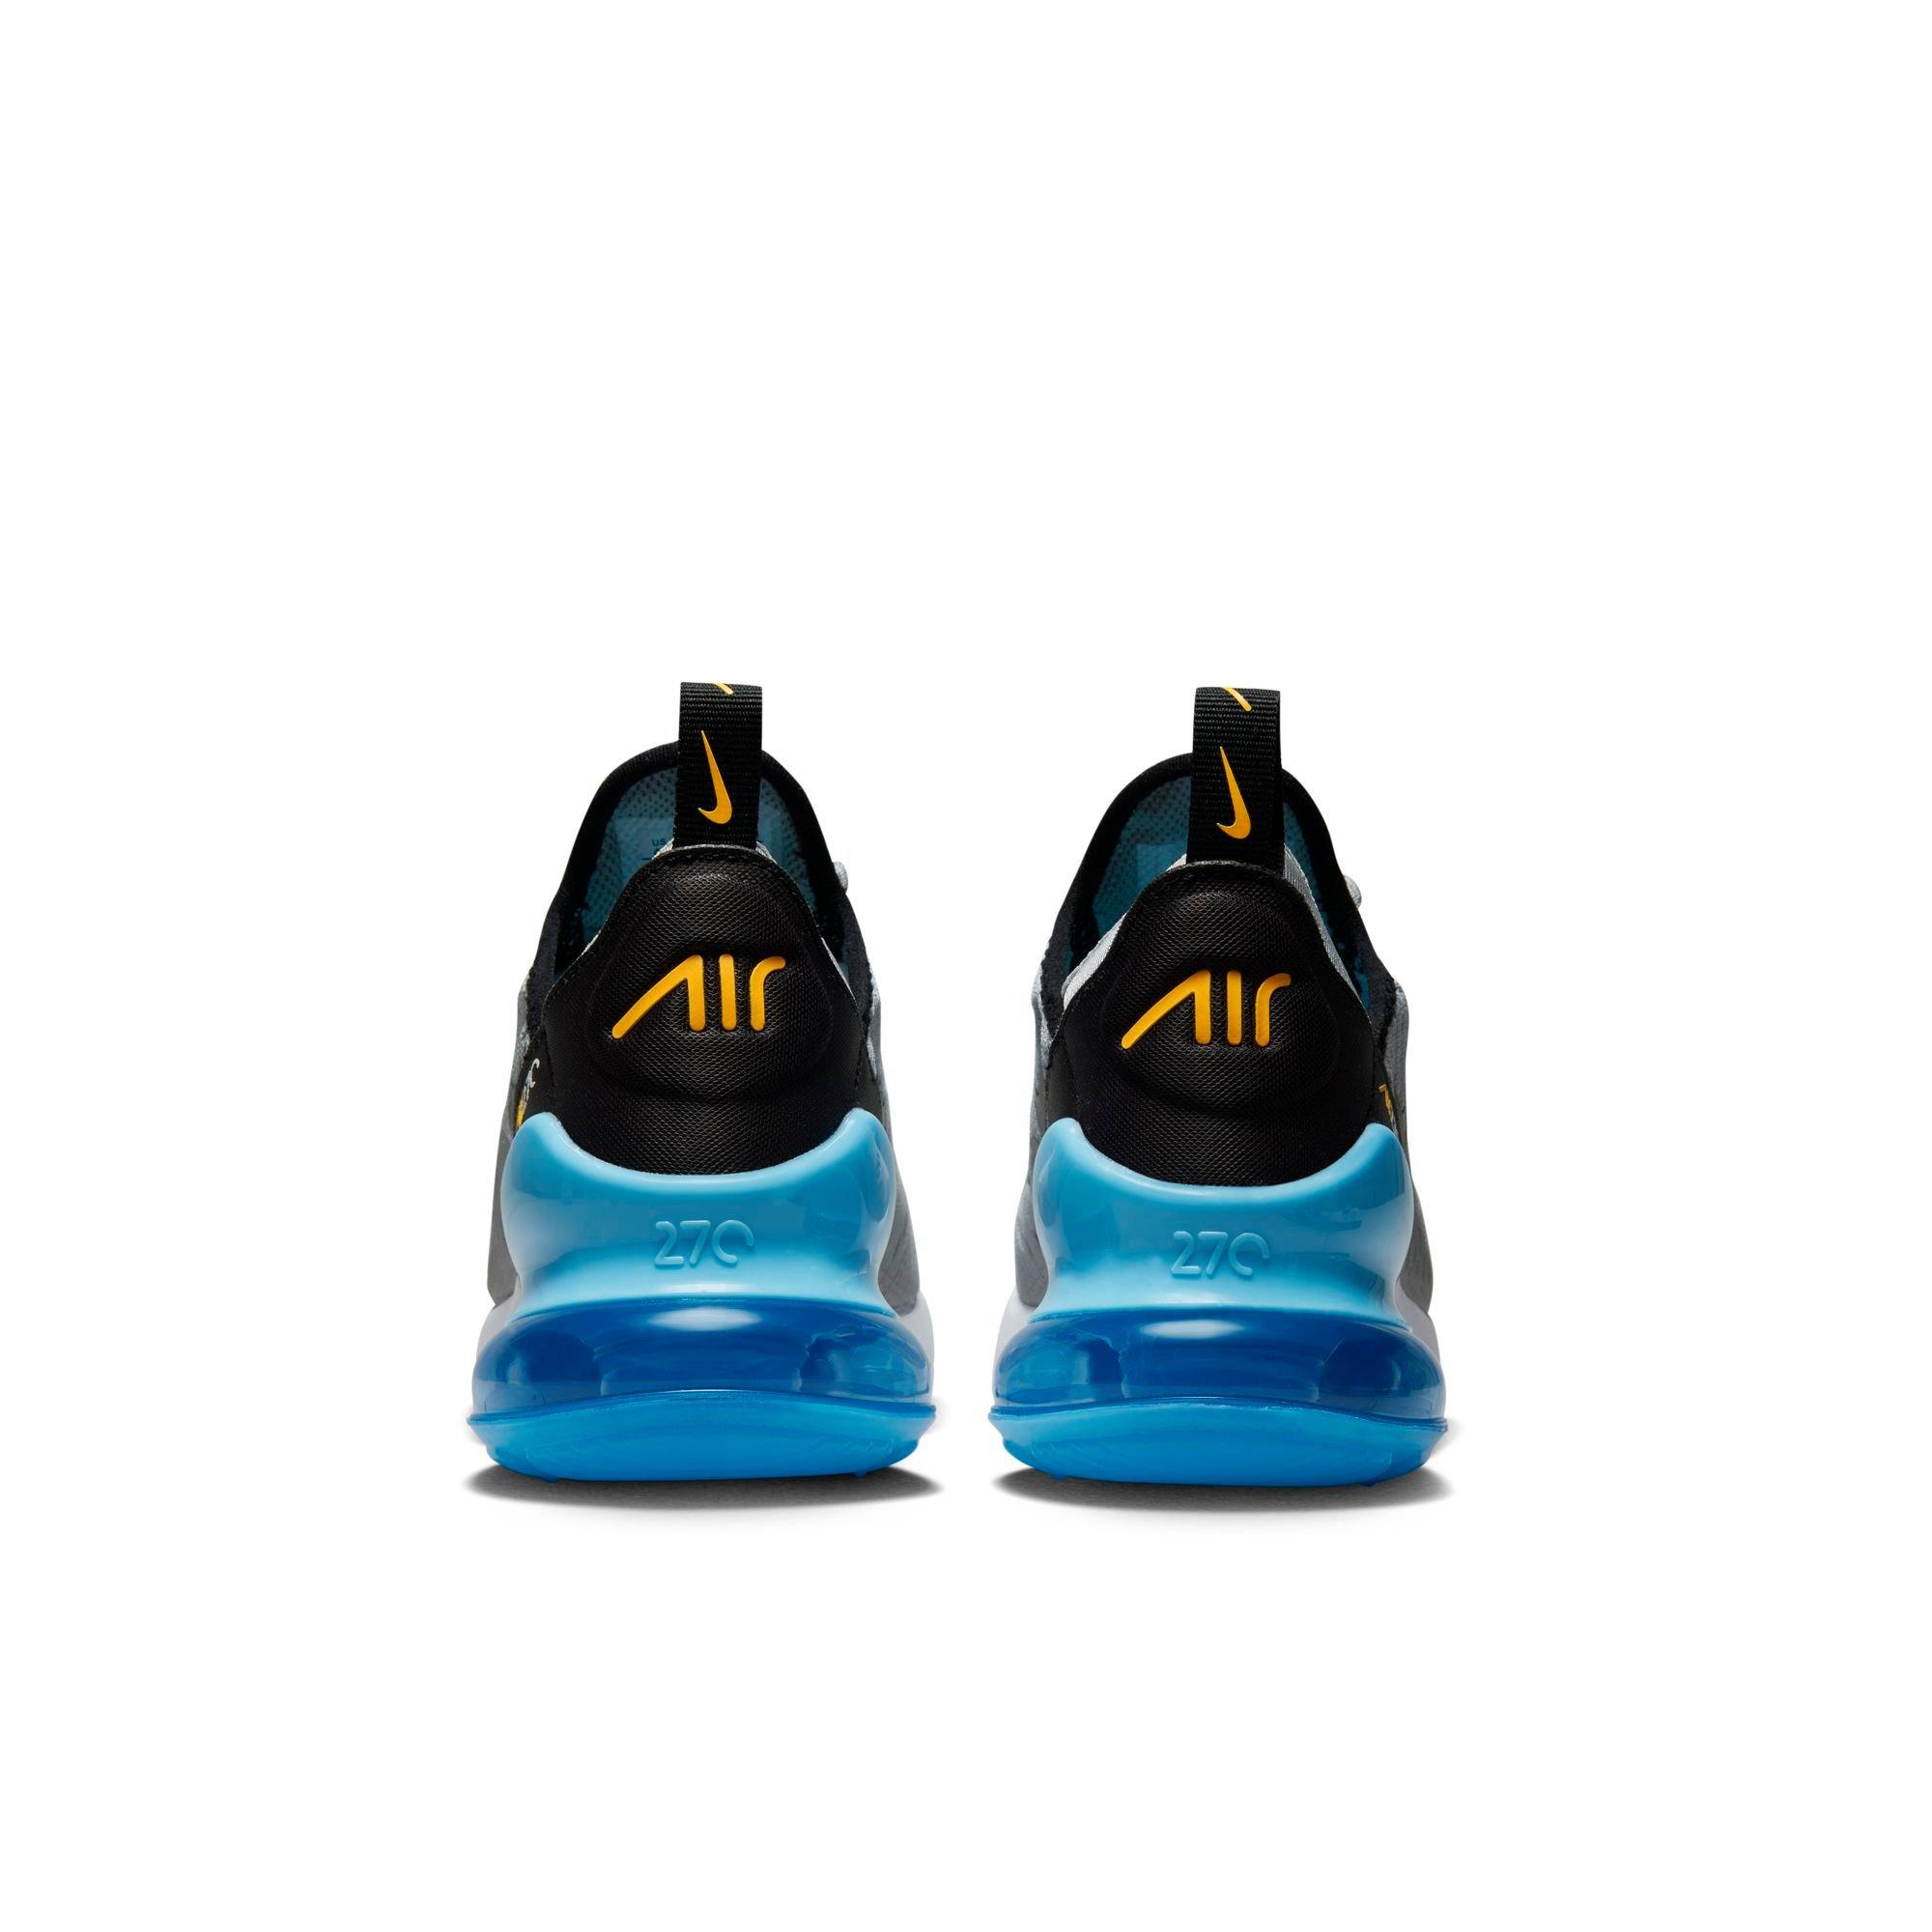 Nike Air Max 270 "Lt Smoke Grey/Iron Grey/Laser Orange/Blue" Grade School Shoe Hibbett | City Gear